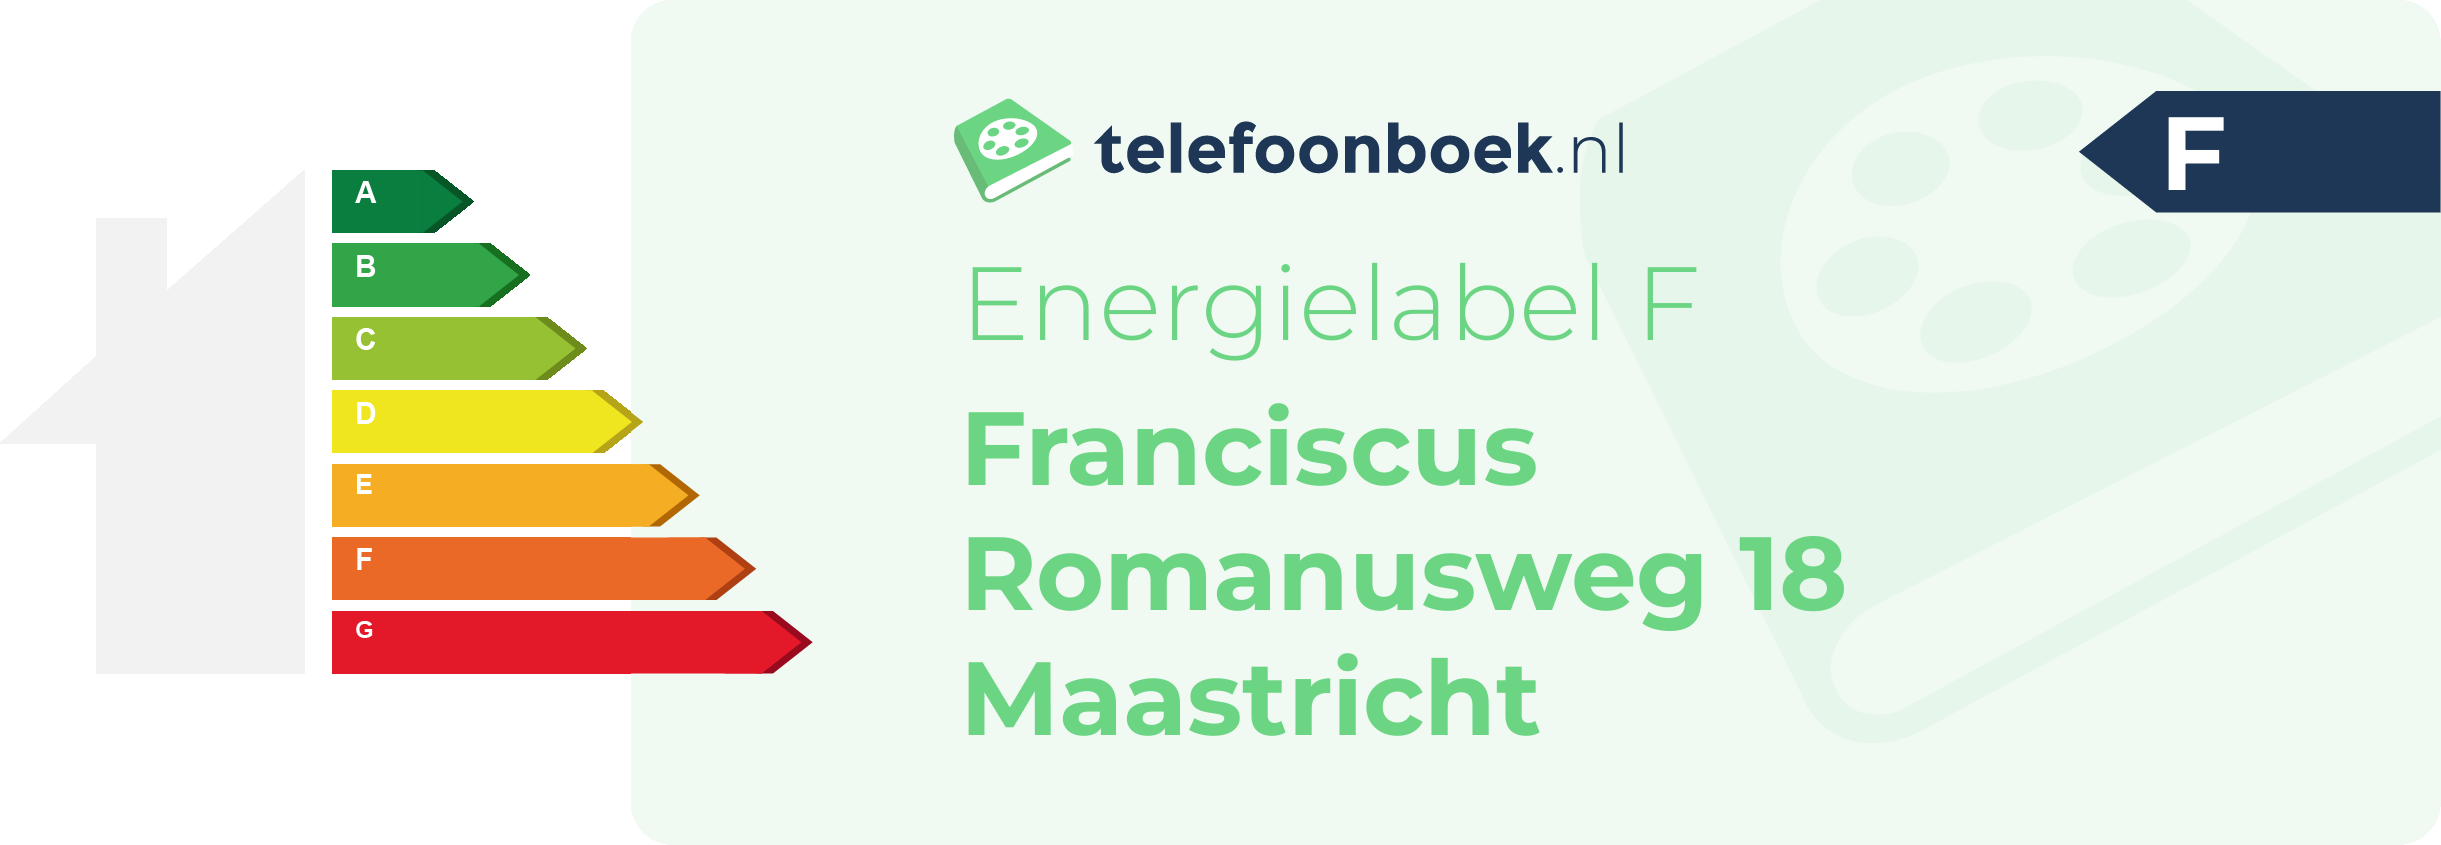 Energielabel Franciscus Romanusweg 18 Maastricht